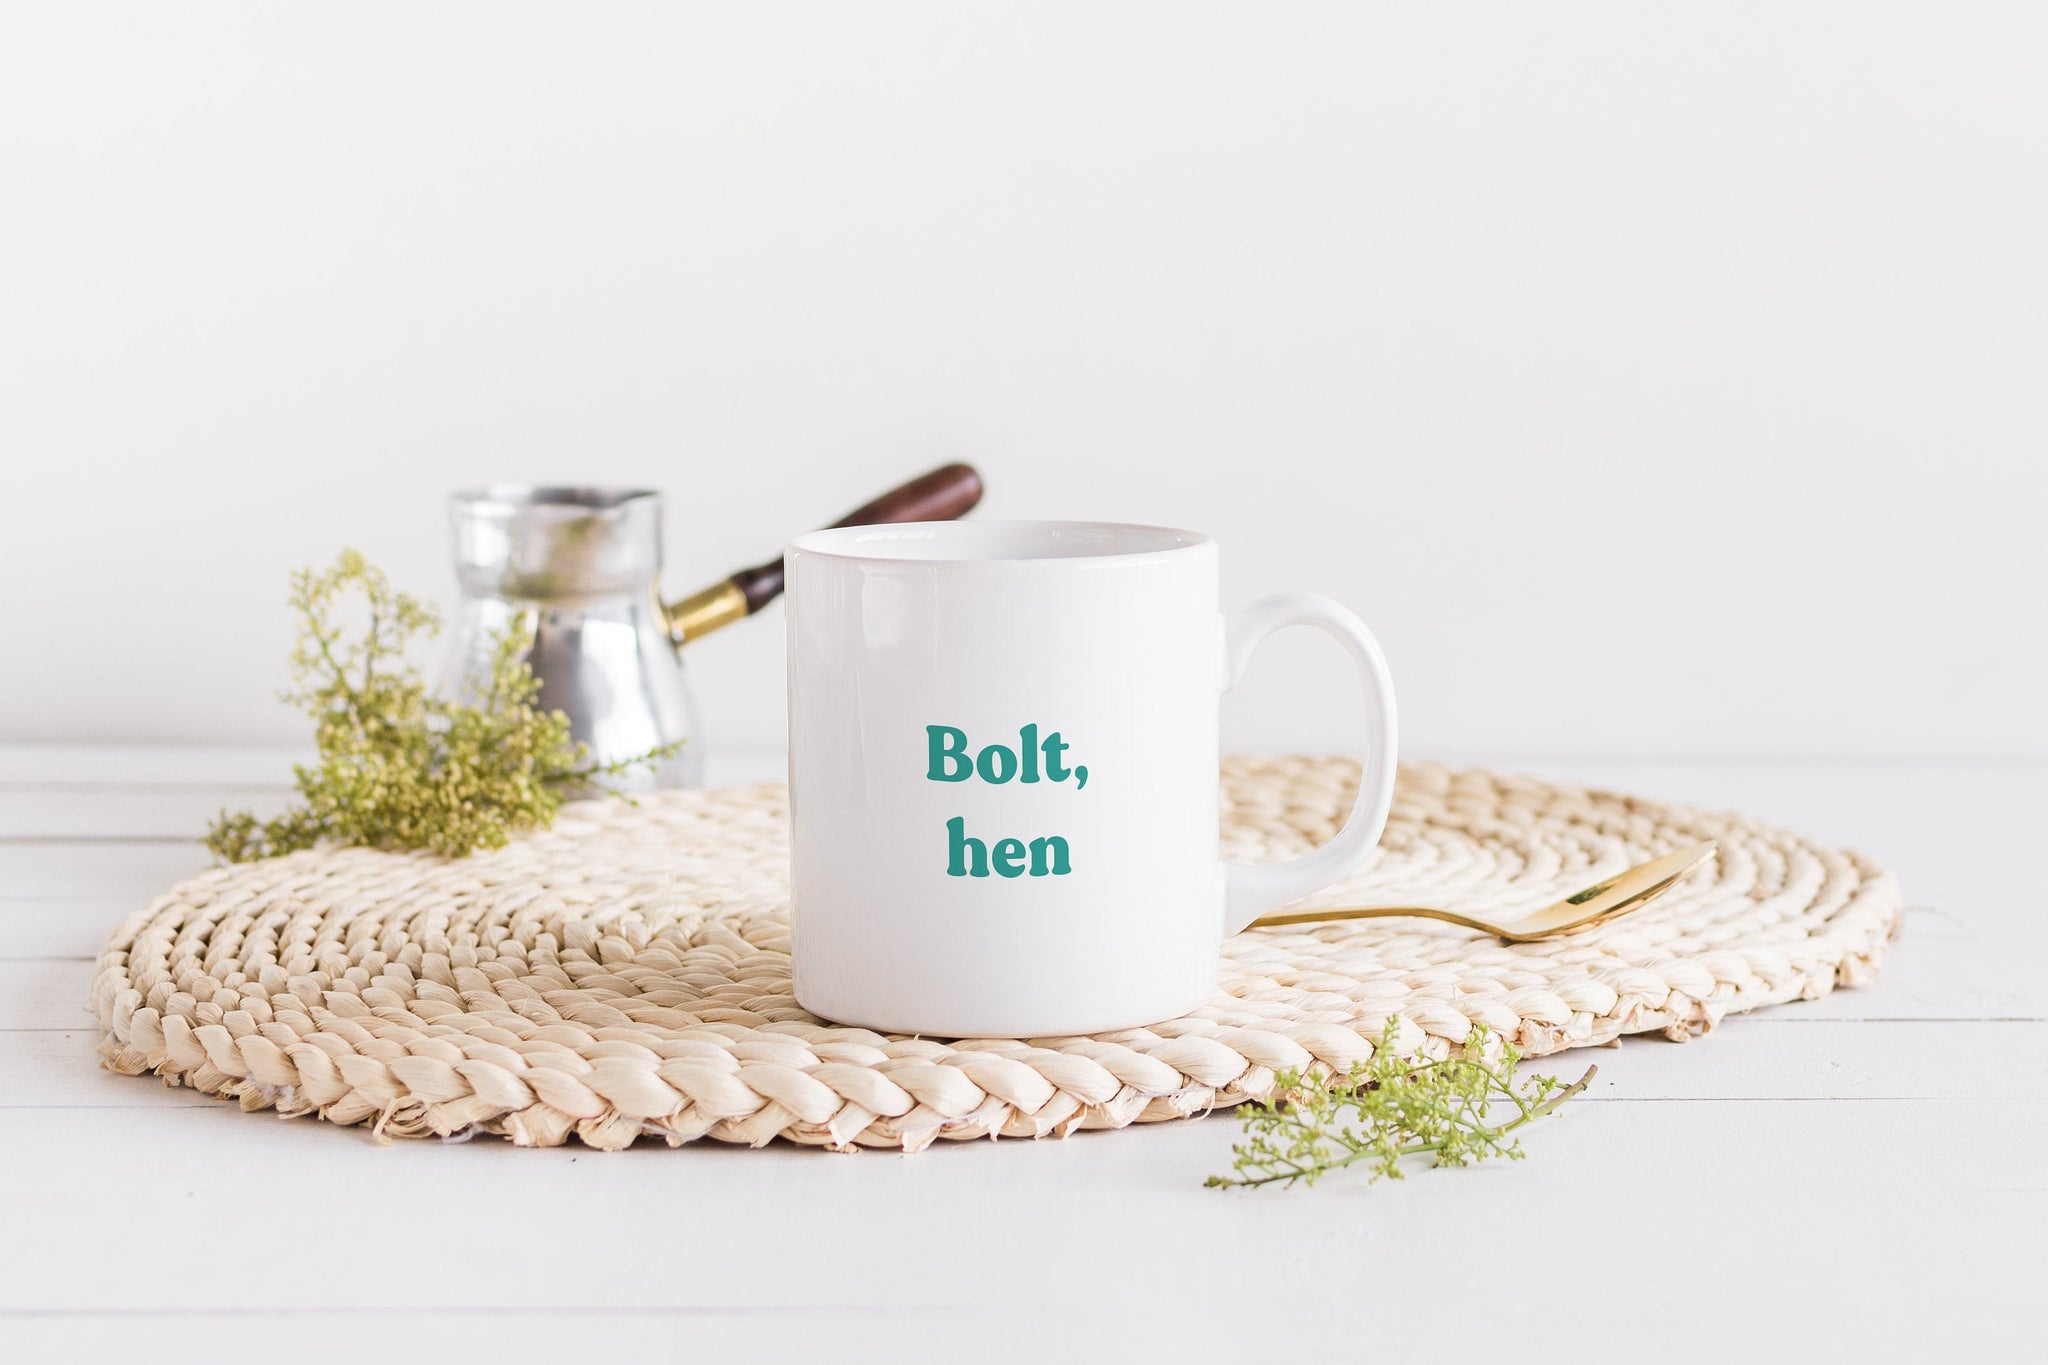 Bolt, hen Scottish Sayings Slang Mug